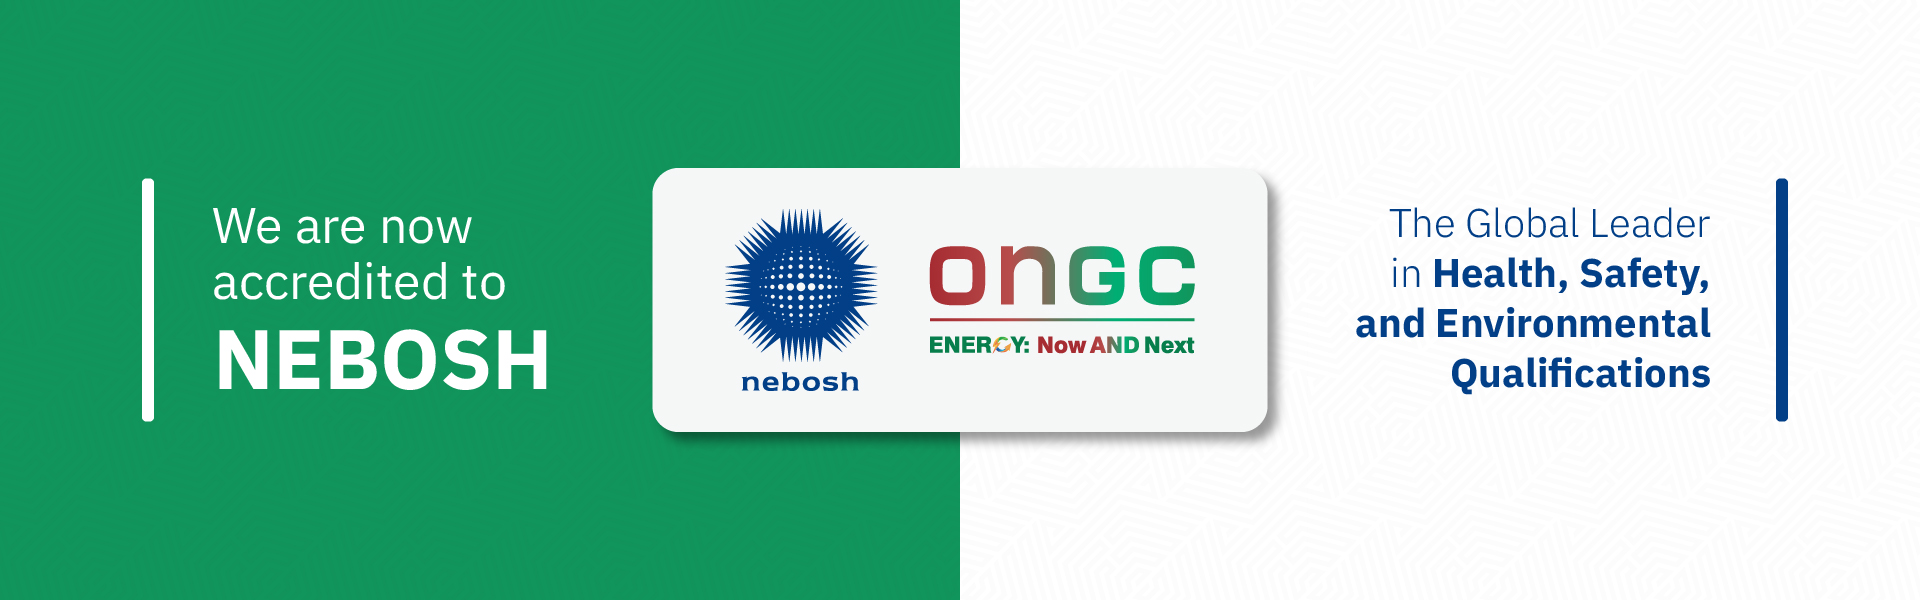 Nebosh ONGC Partnership